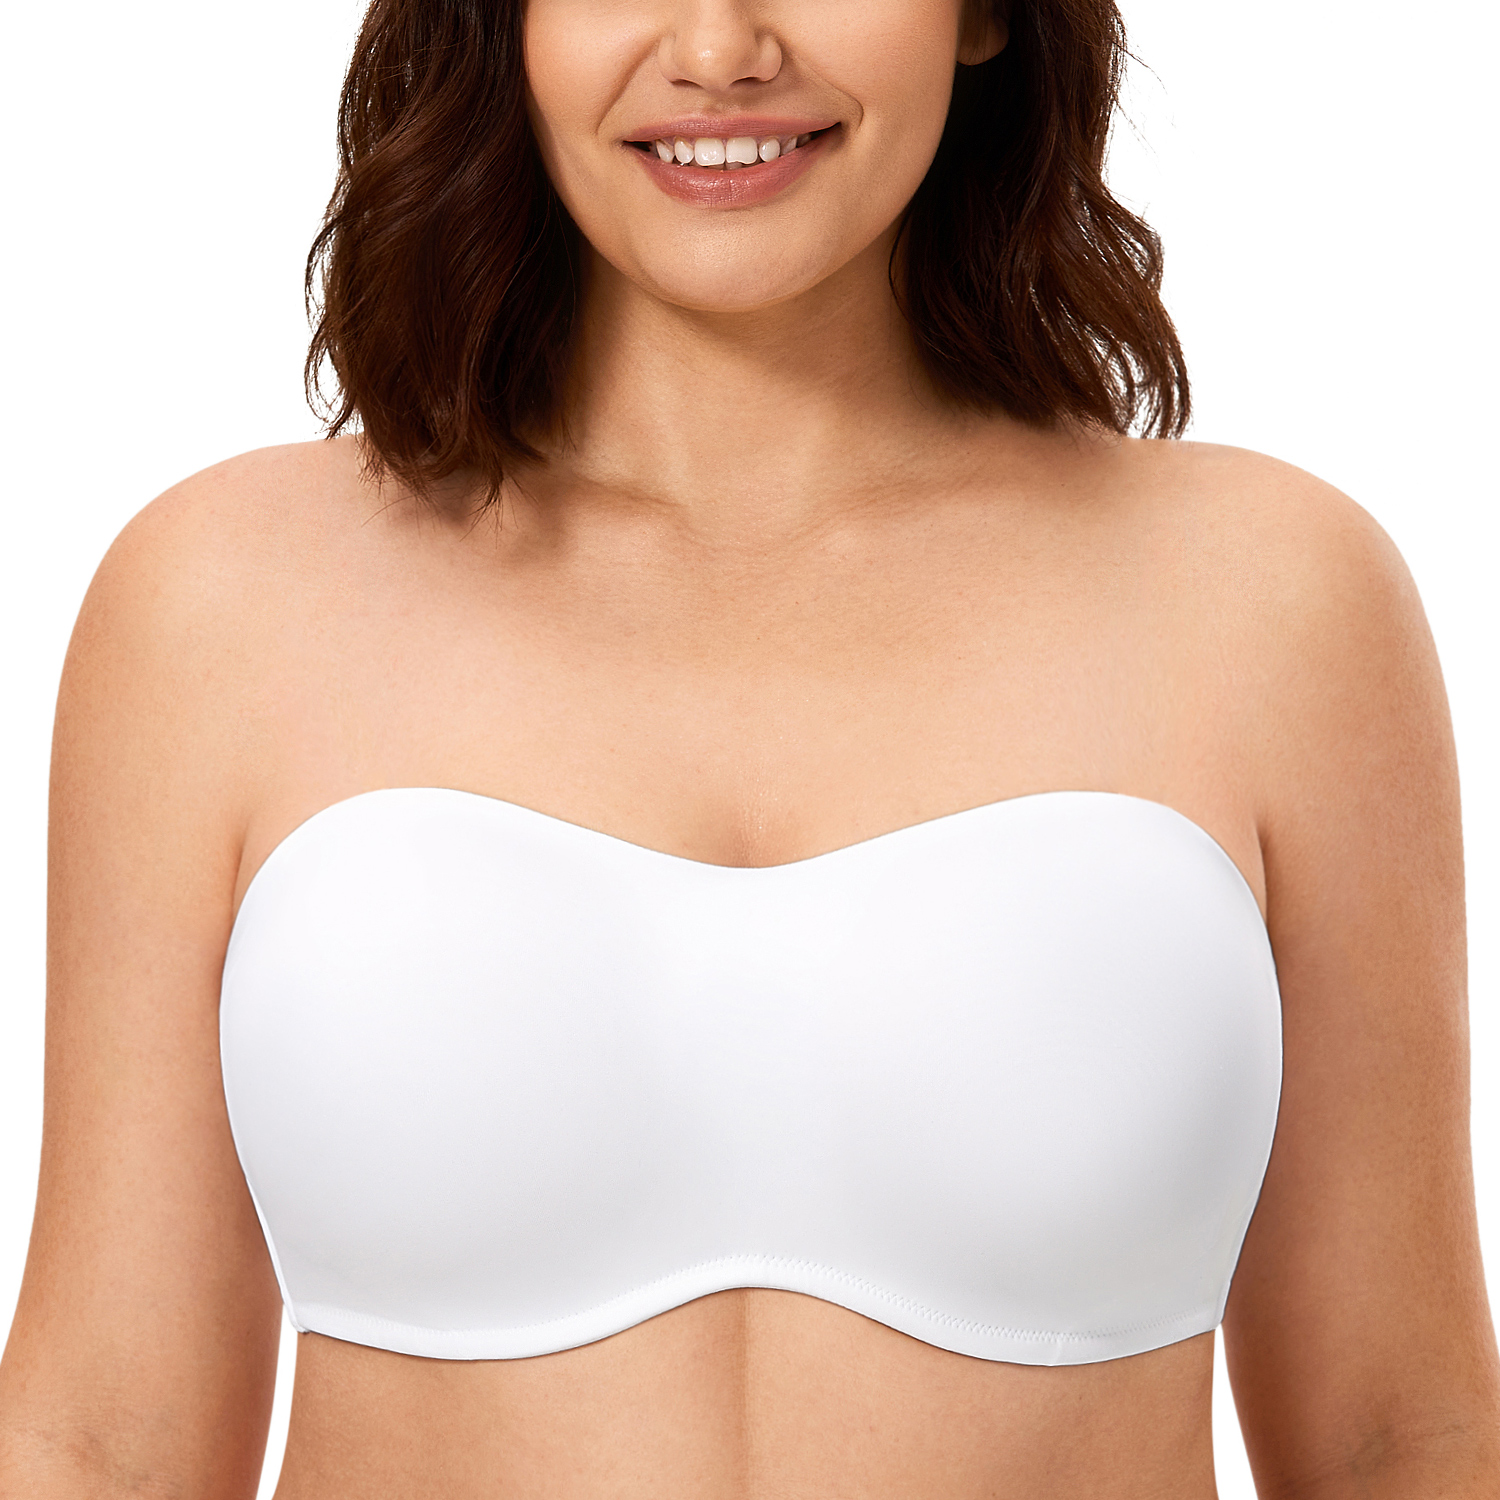  Womens Strapless Bra Silicone-Free Minimizer Bandeau Plus  Size Unlined White 32B